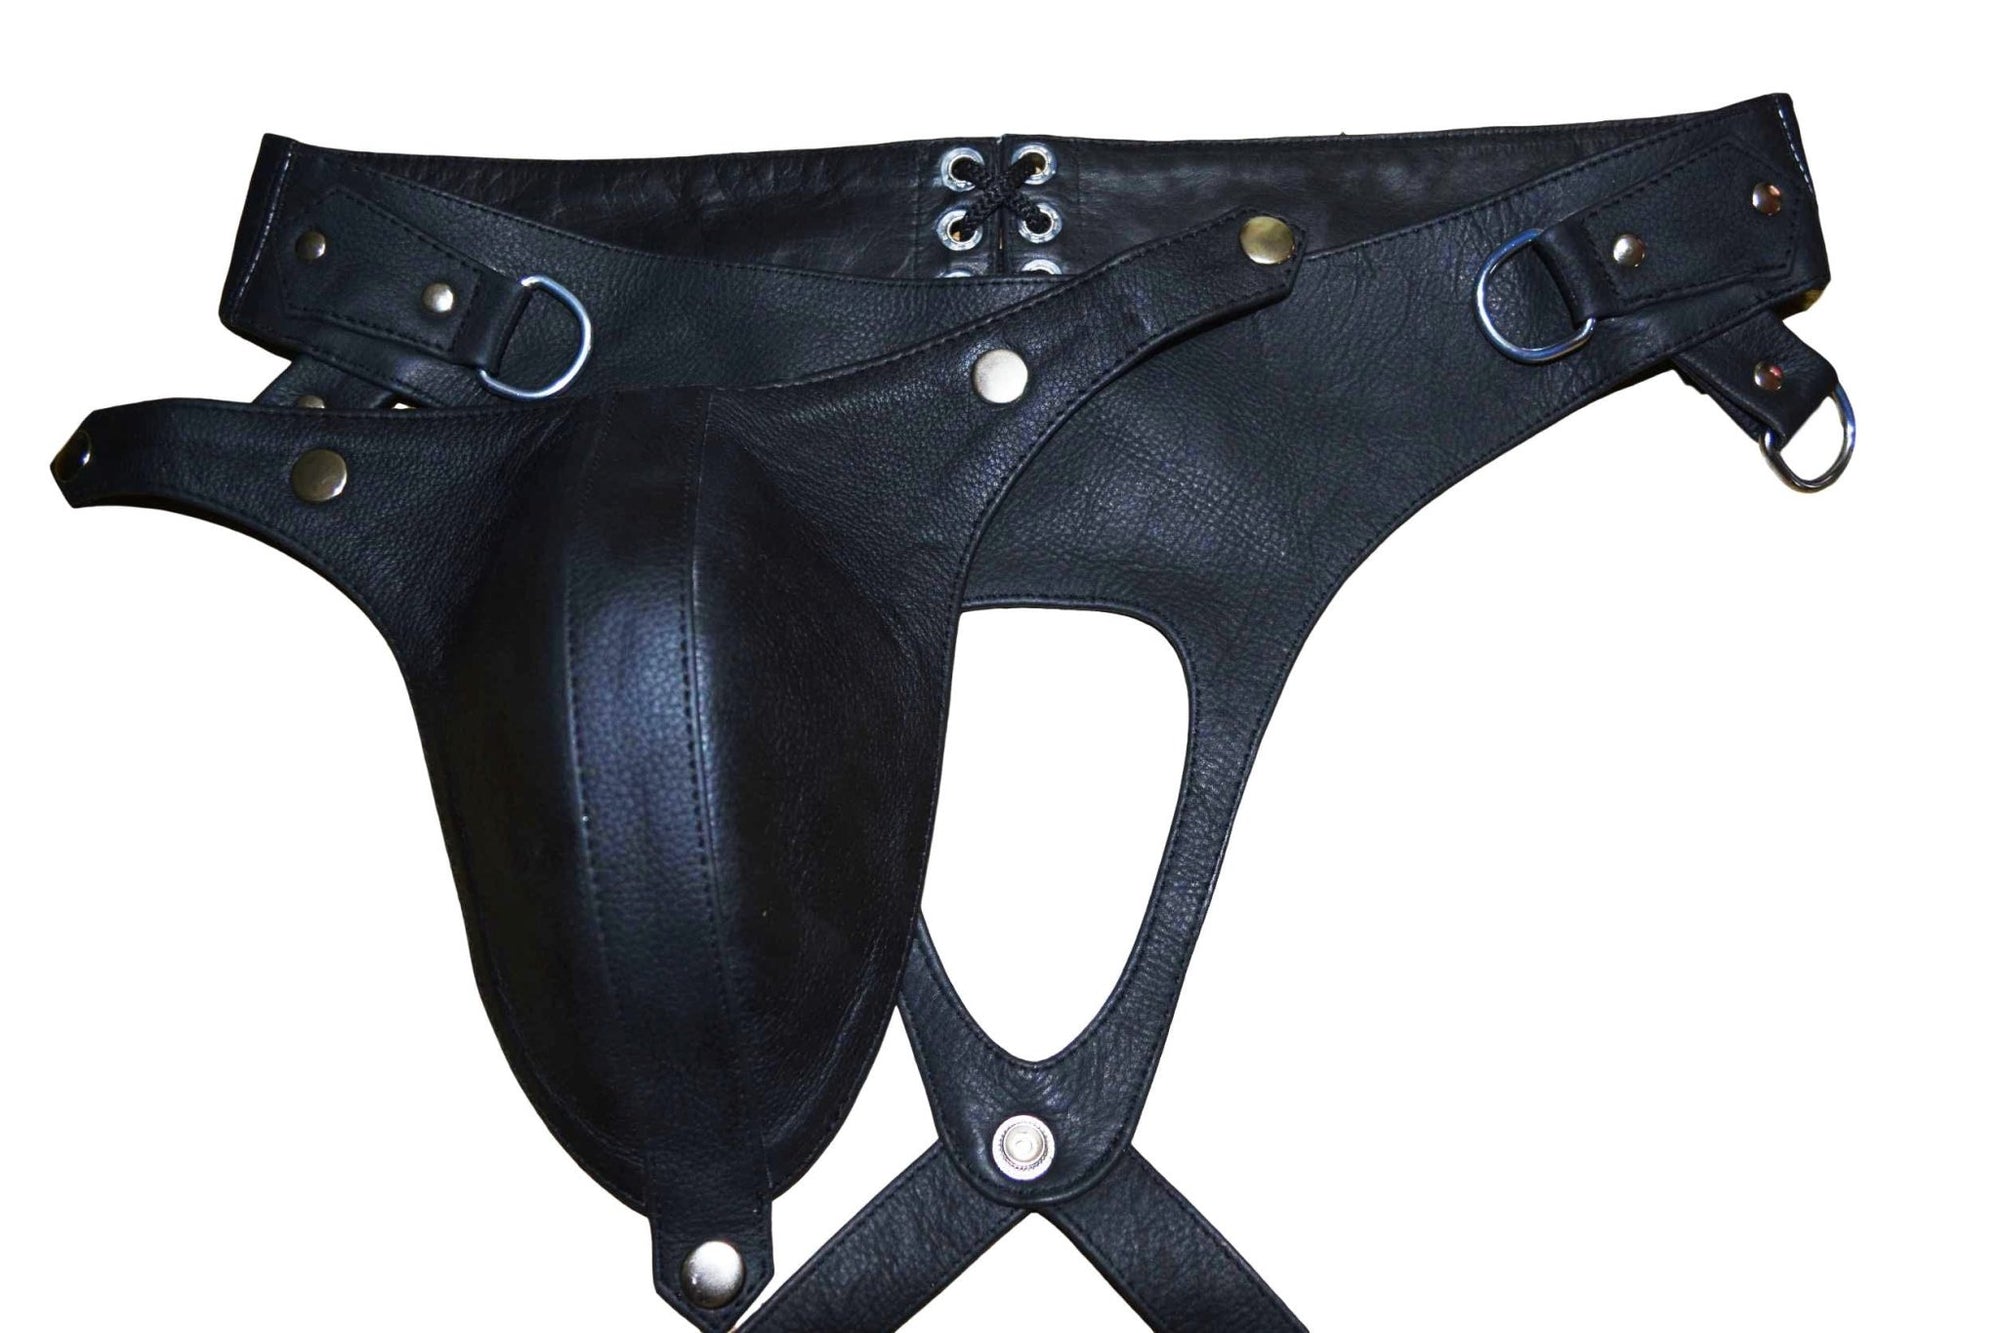 Mens Underwear Leather-Like Cod Piece Thong Jock Purple New, Black, All Sizes - MRI Leathers